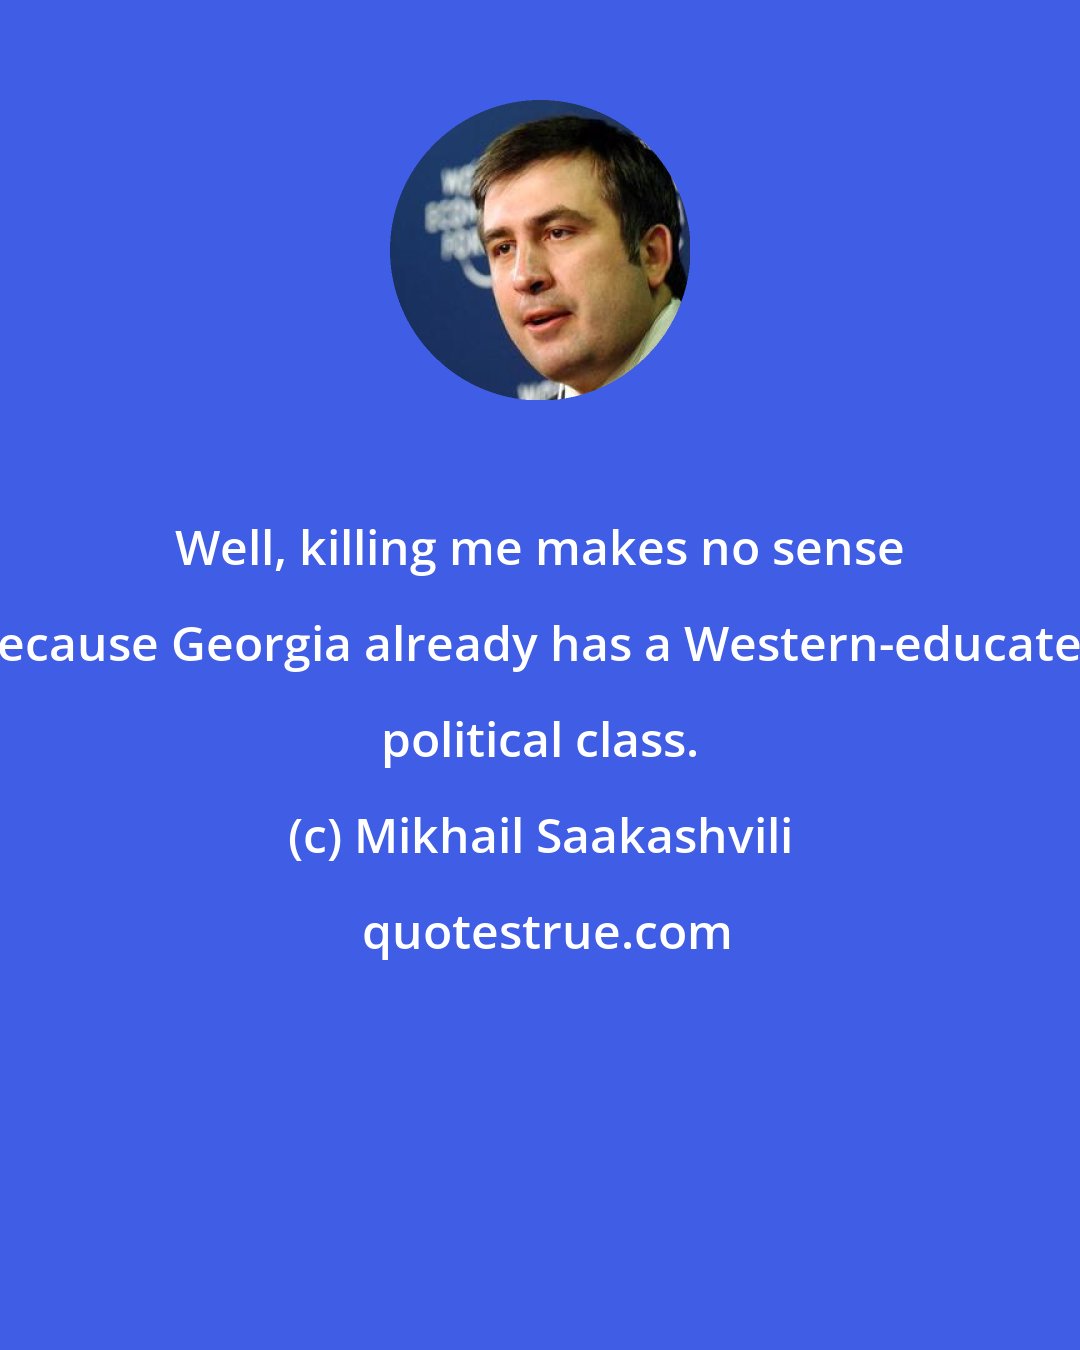 Mikhail Saakashvili: Well, killing me makes no sense because Georgia already has a Western-educated political class.